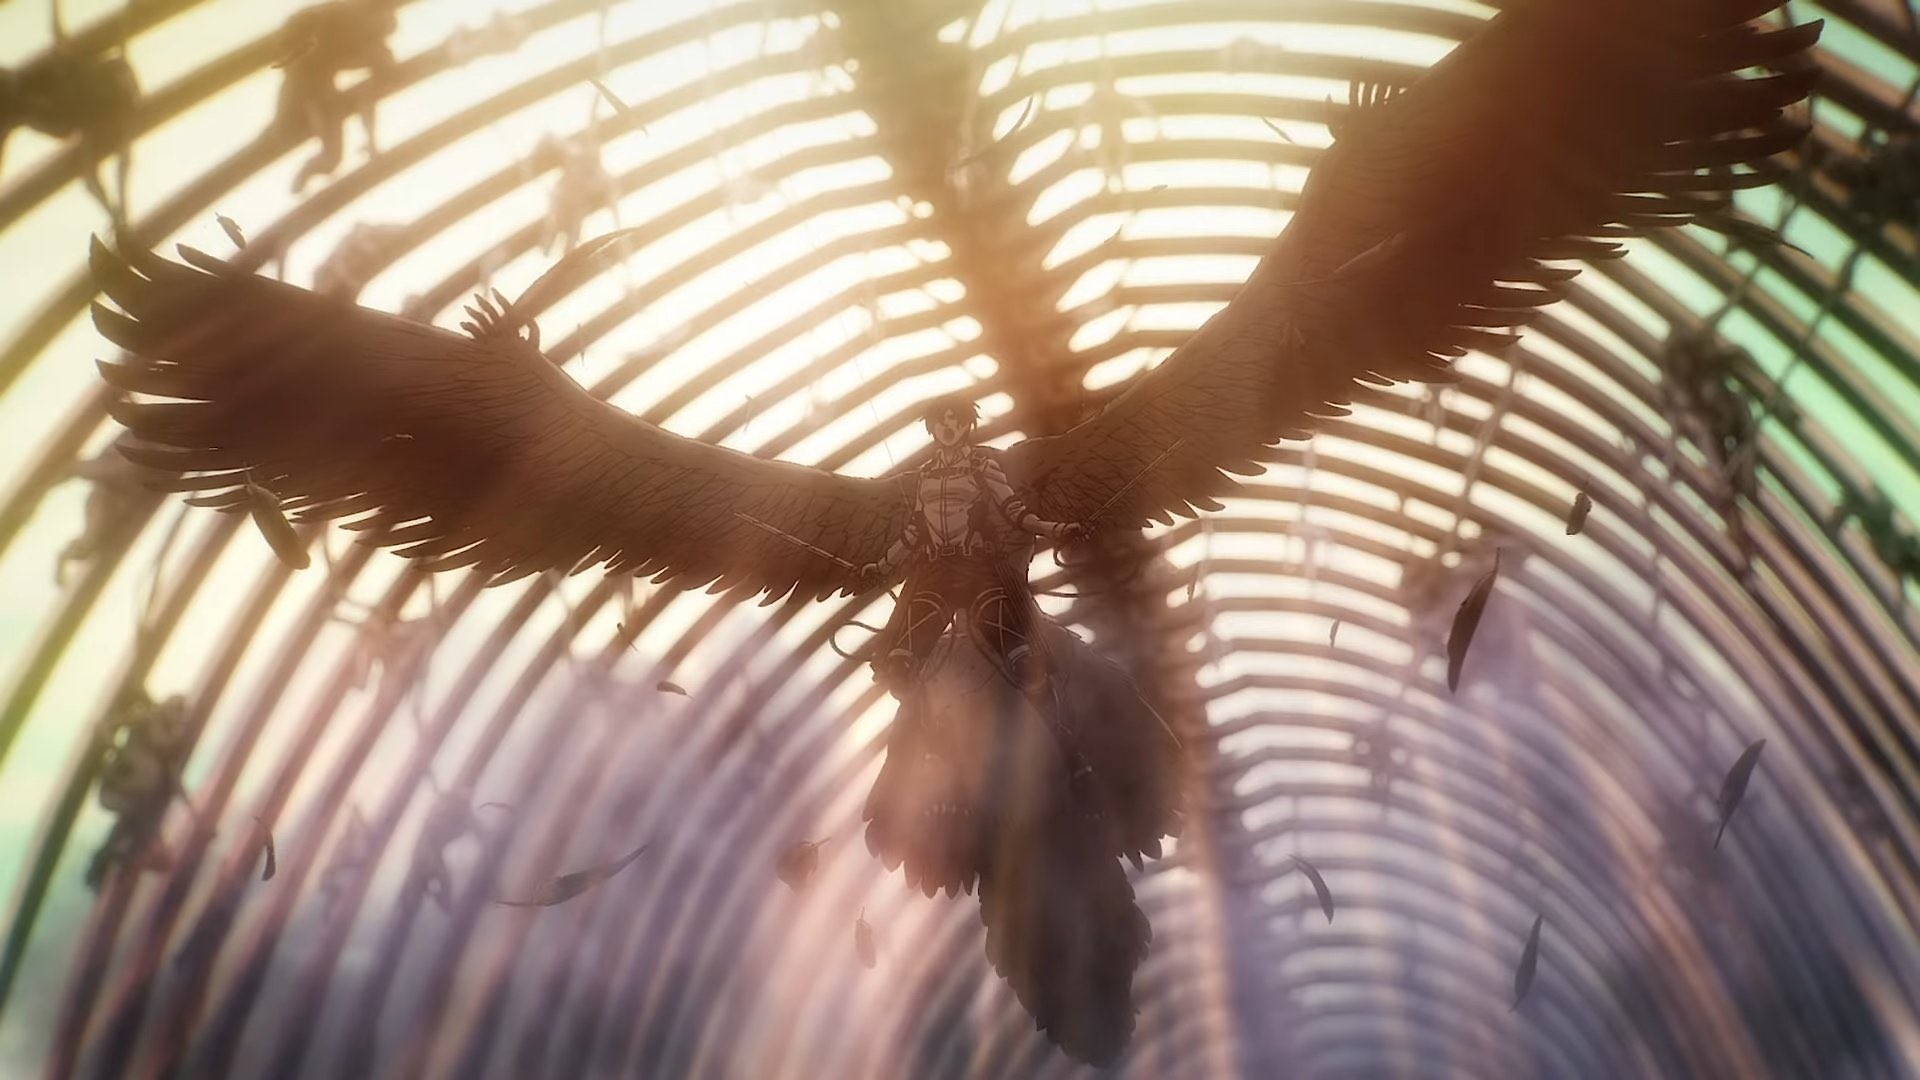 Attack On Titan lança vídeo promocional da Temporada 3 - Parte 2